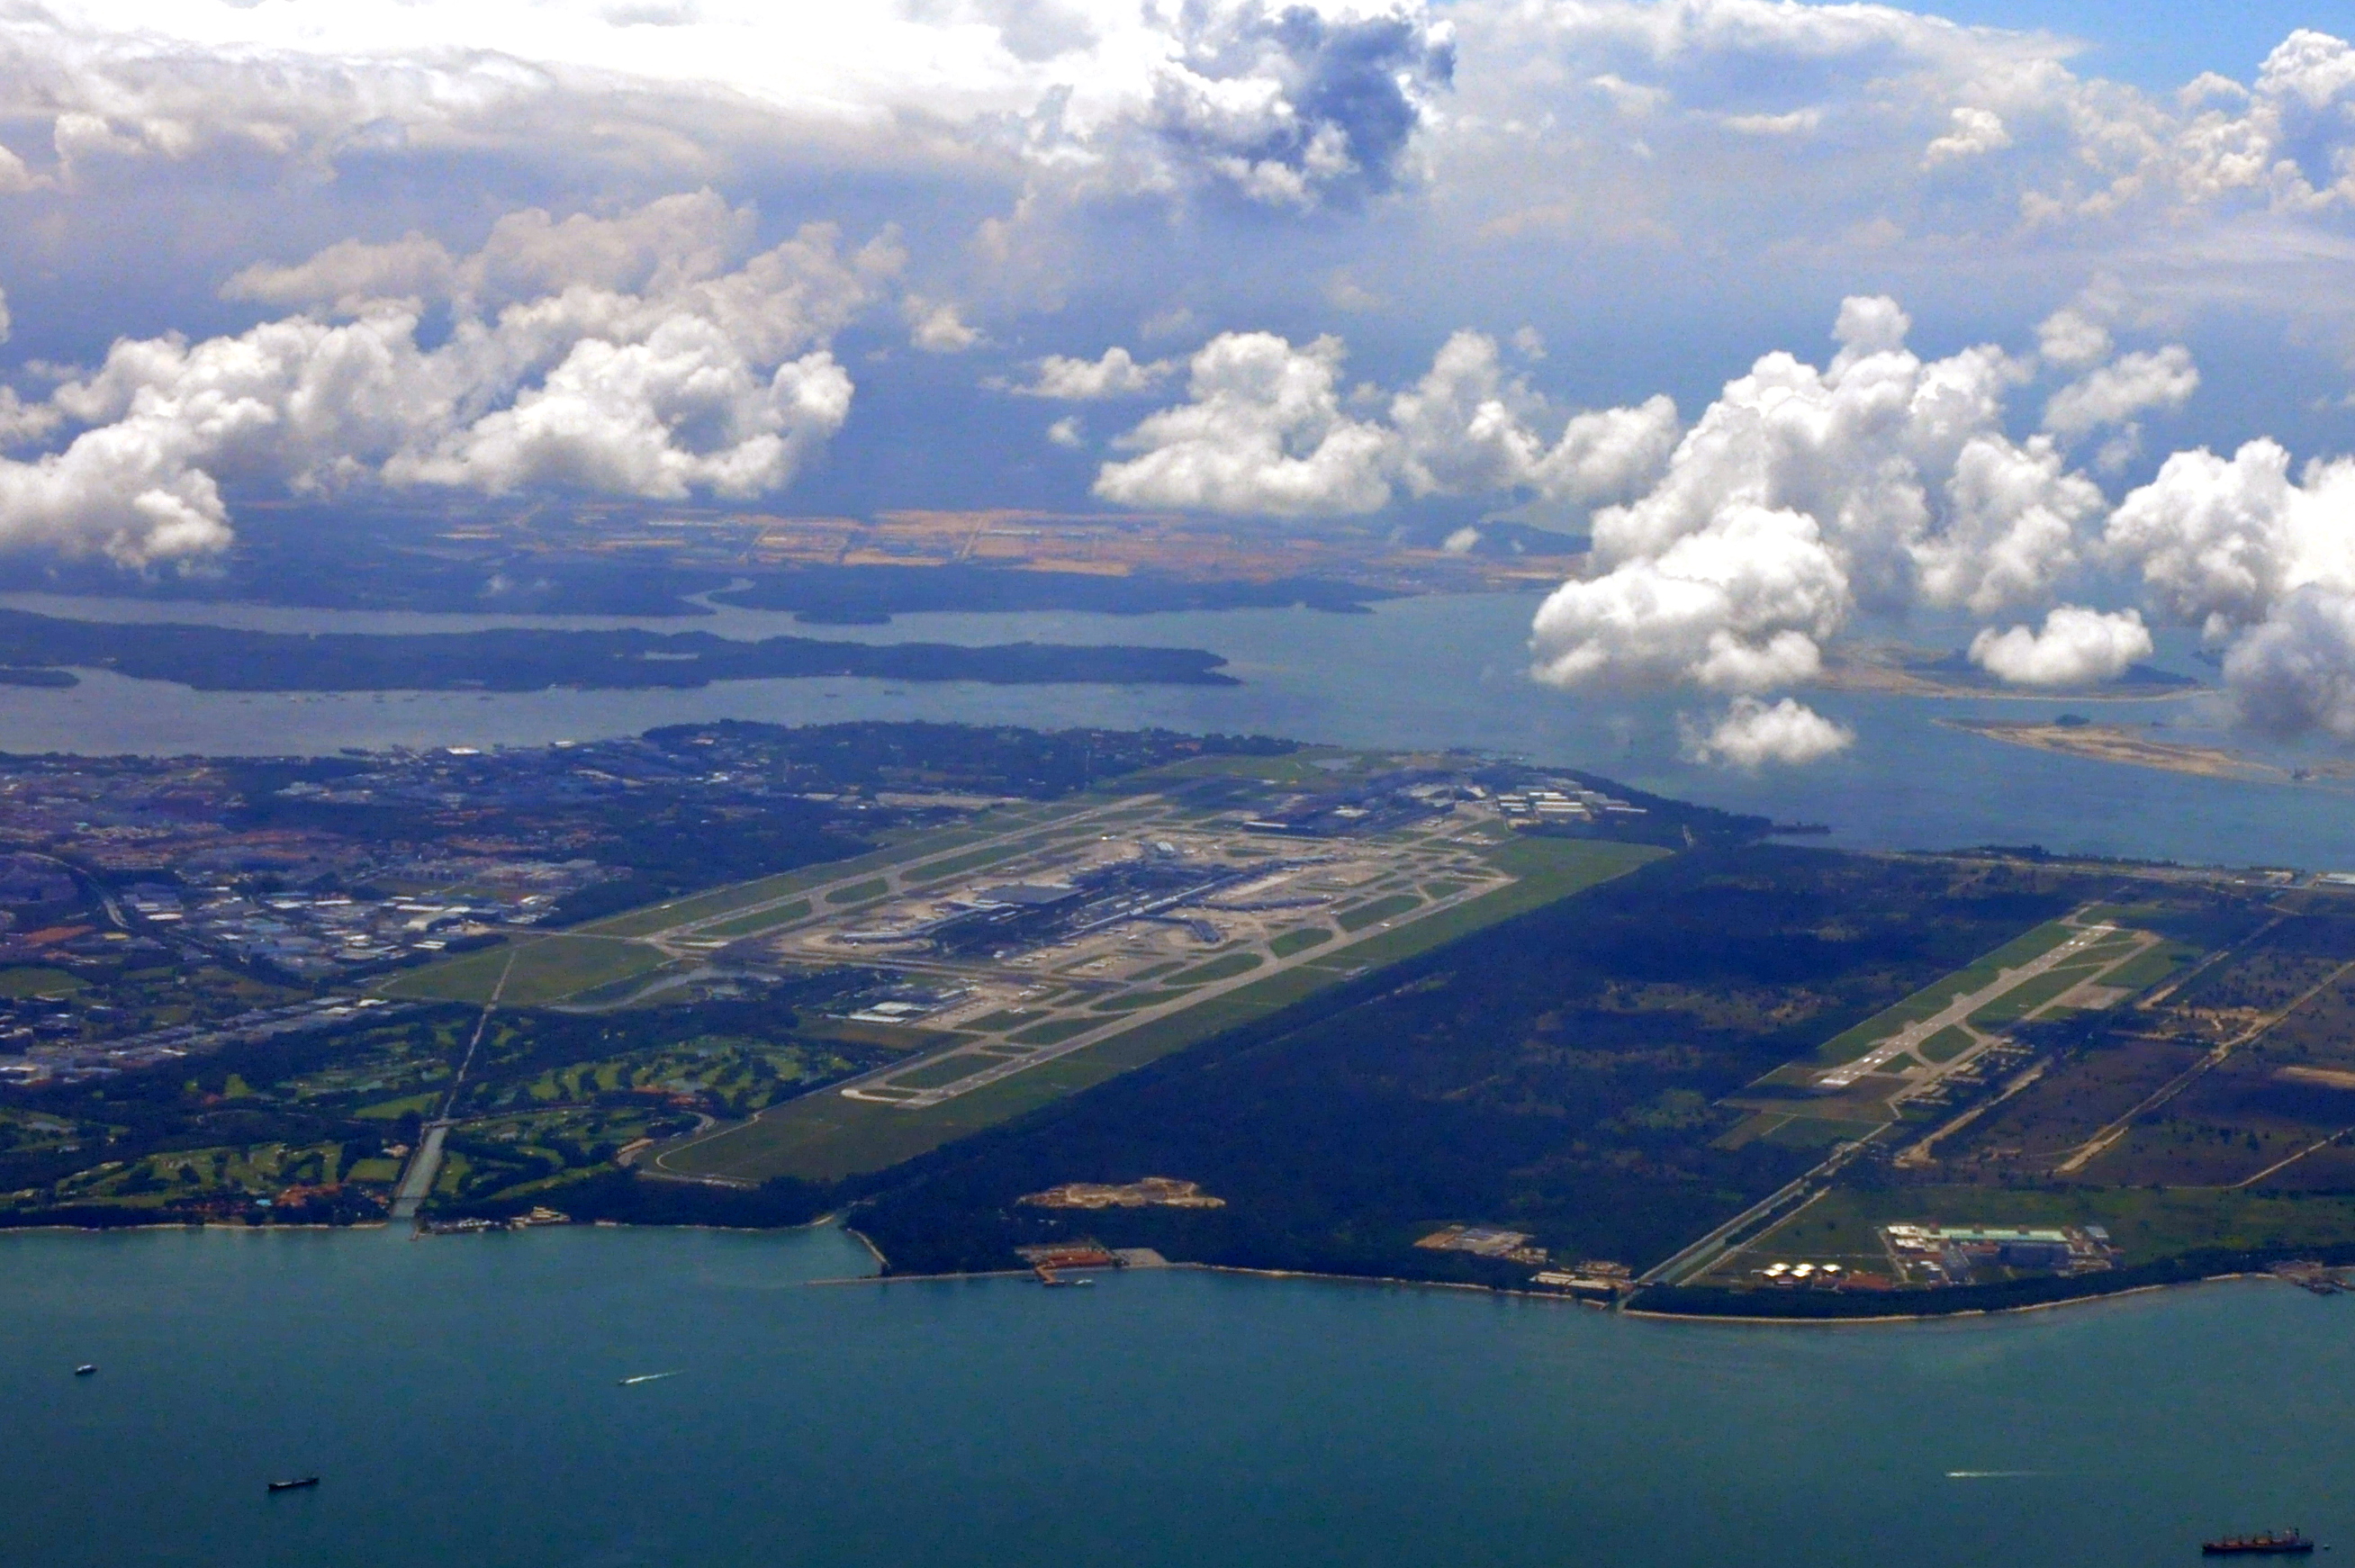 Aerial_view_of_Singapore_Changi_Airport_and_Changi_Air_Base_-_20110523.jpg